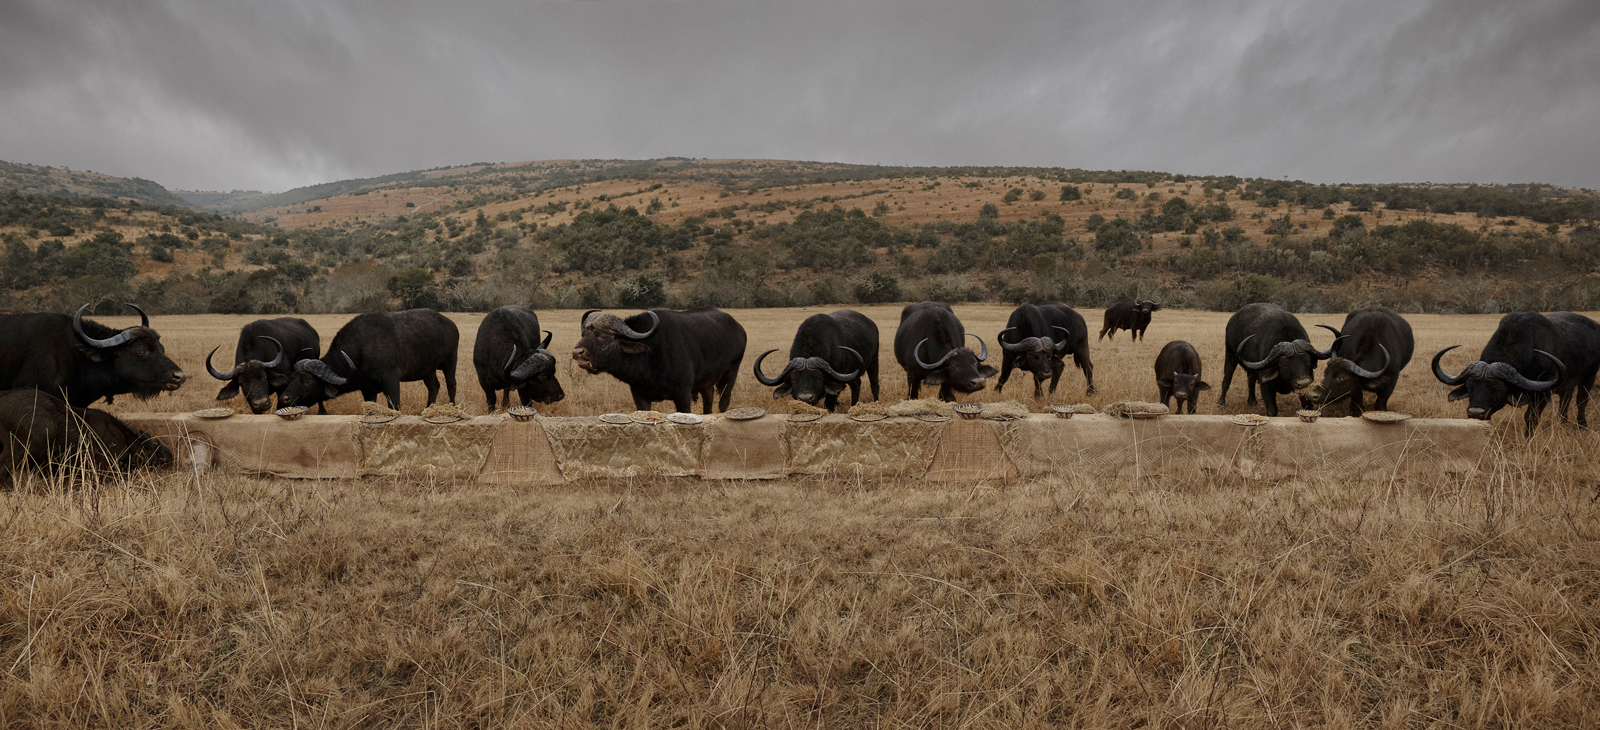  The Water Buffalo Feast  South Africa, 2016  10”x22” | 20”x44” | 40”x88” 